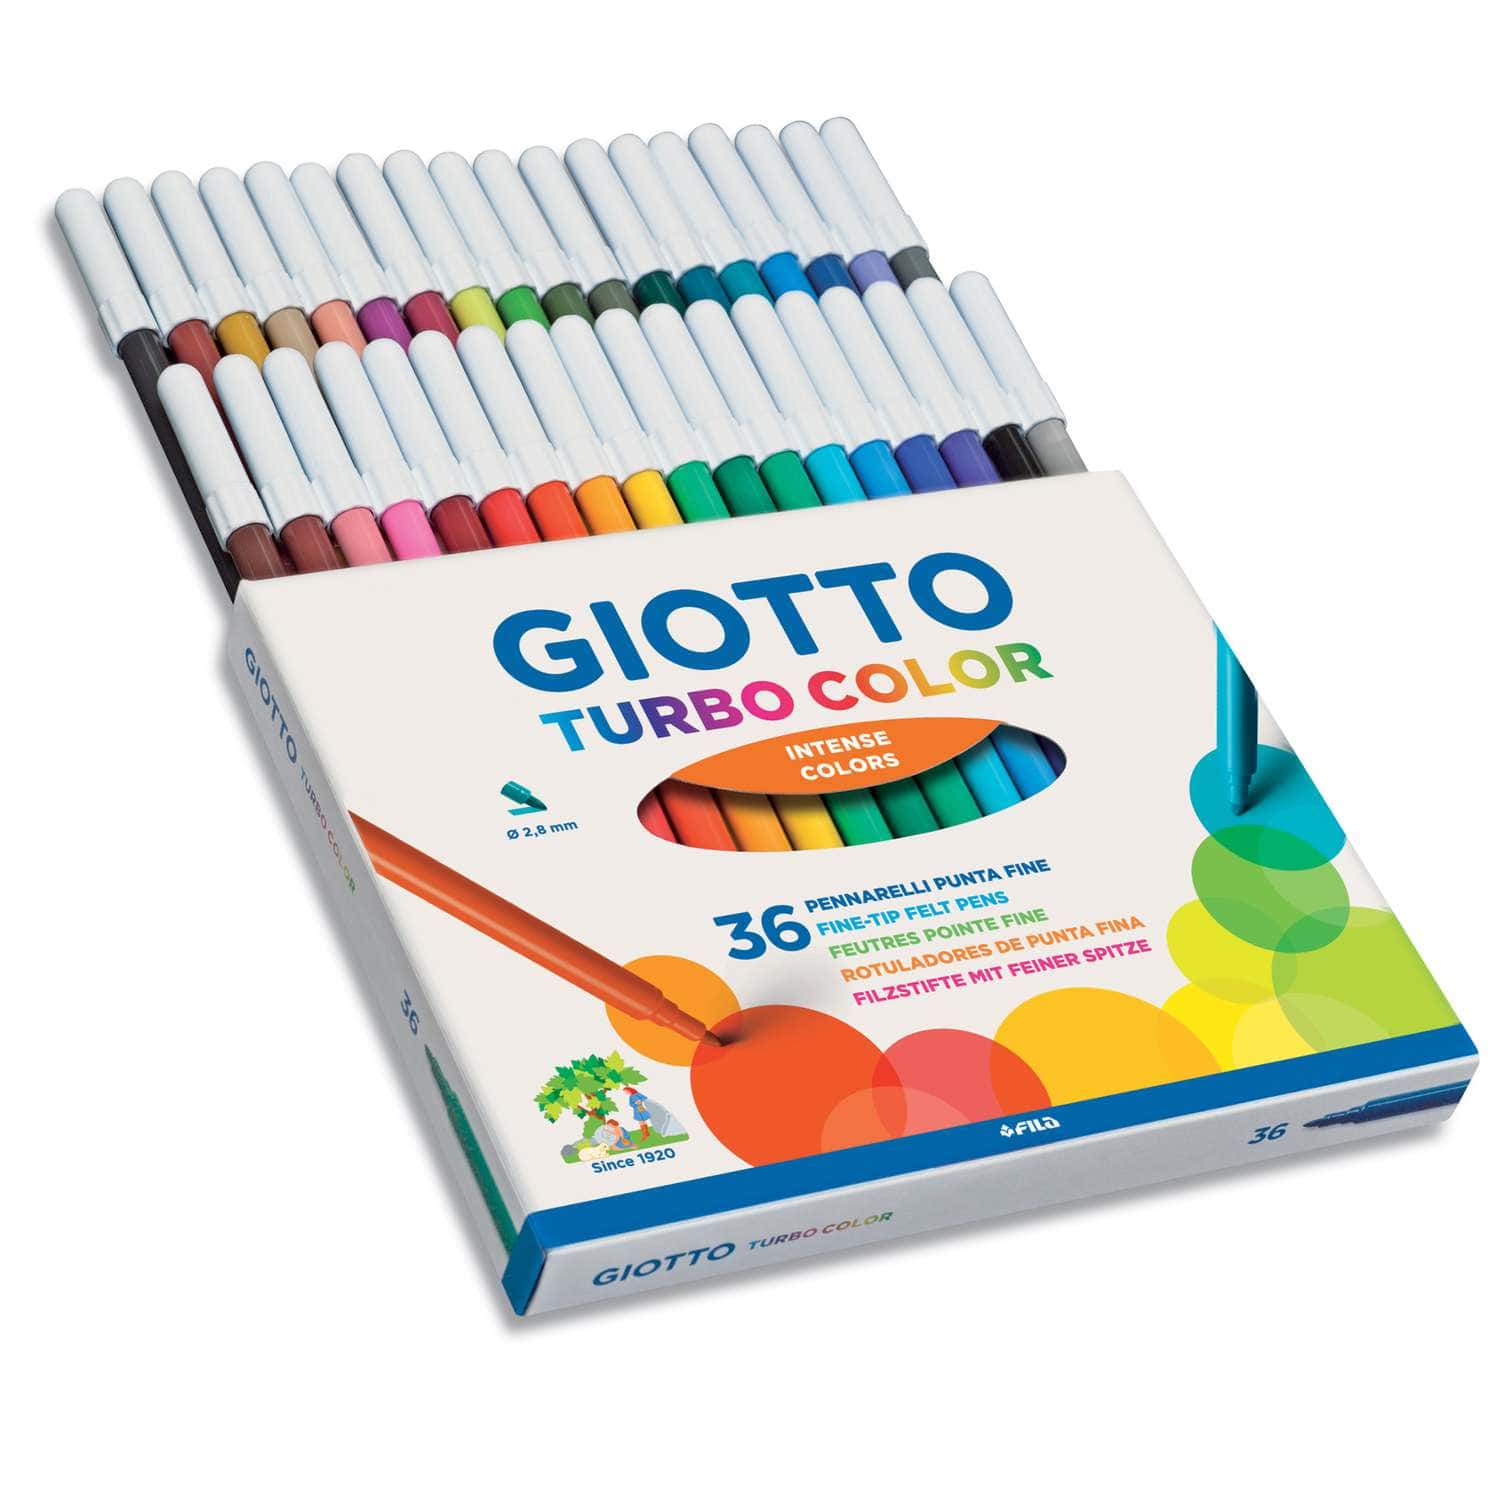 Giotto Turbo Color Fibre Pen Sets, 50,000+ Art Supplies